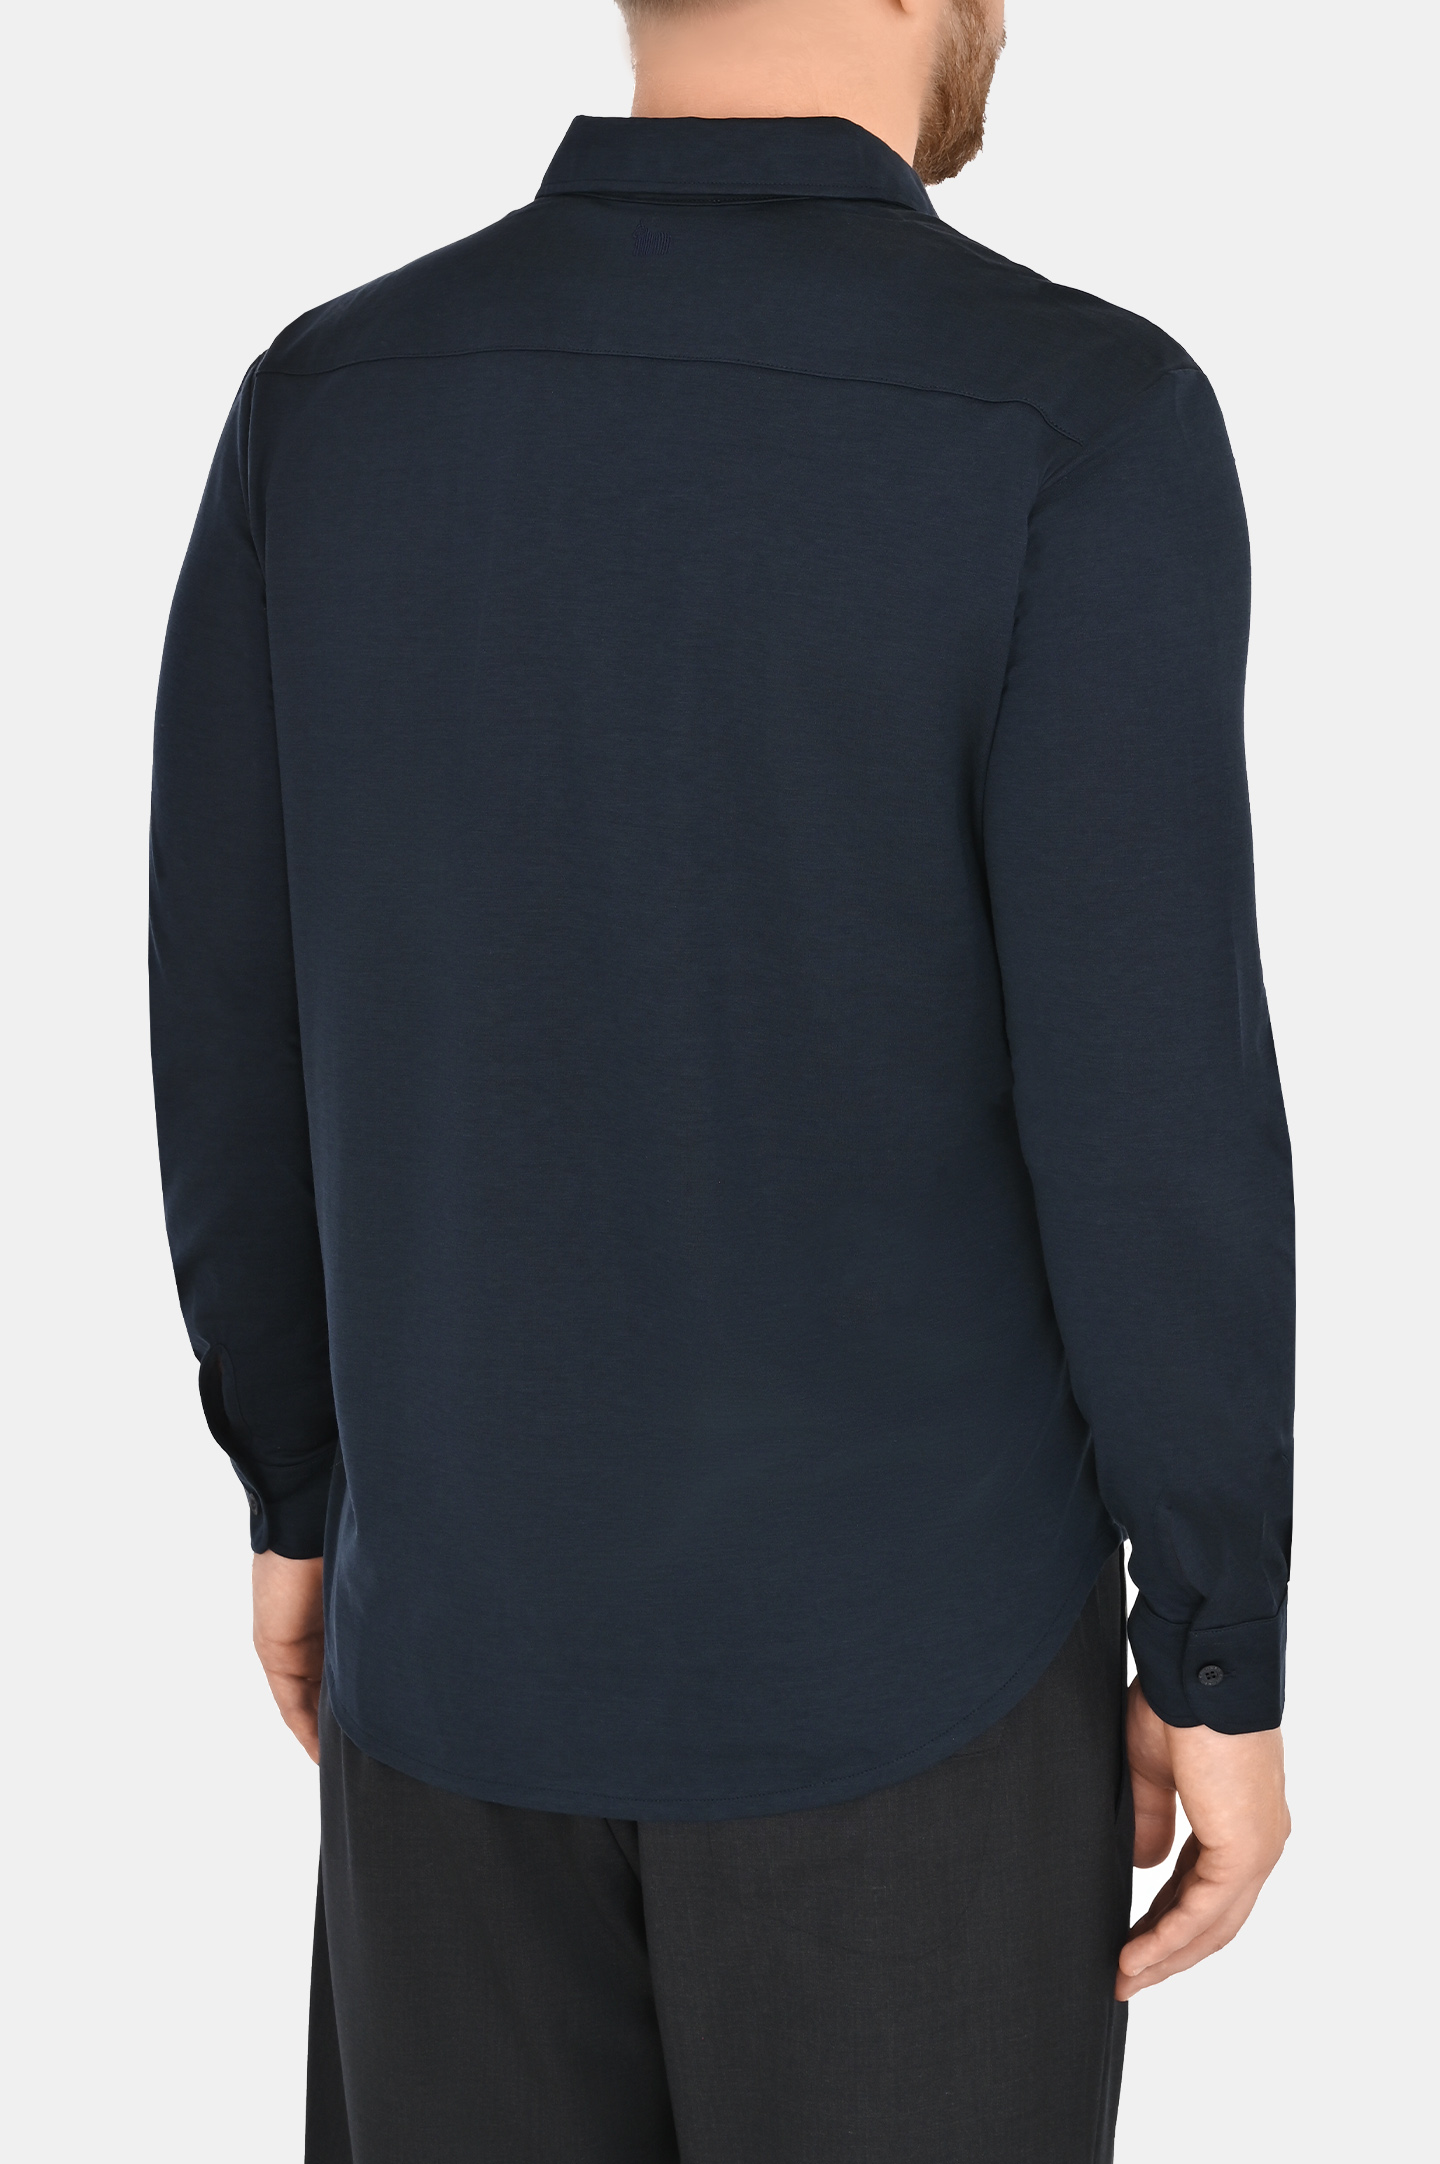 Рубашка из шелка и хлопка COLOMBO TS00382/-/A00897, цвет: Темно-синий, Мужской